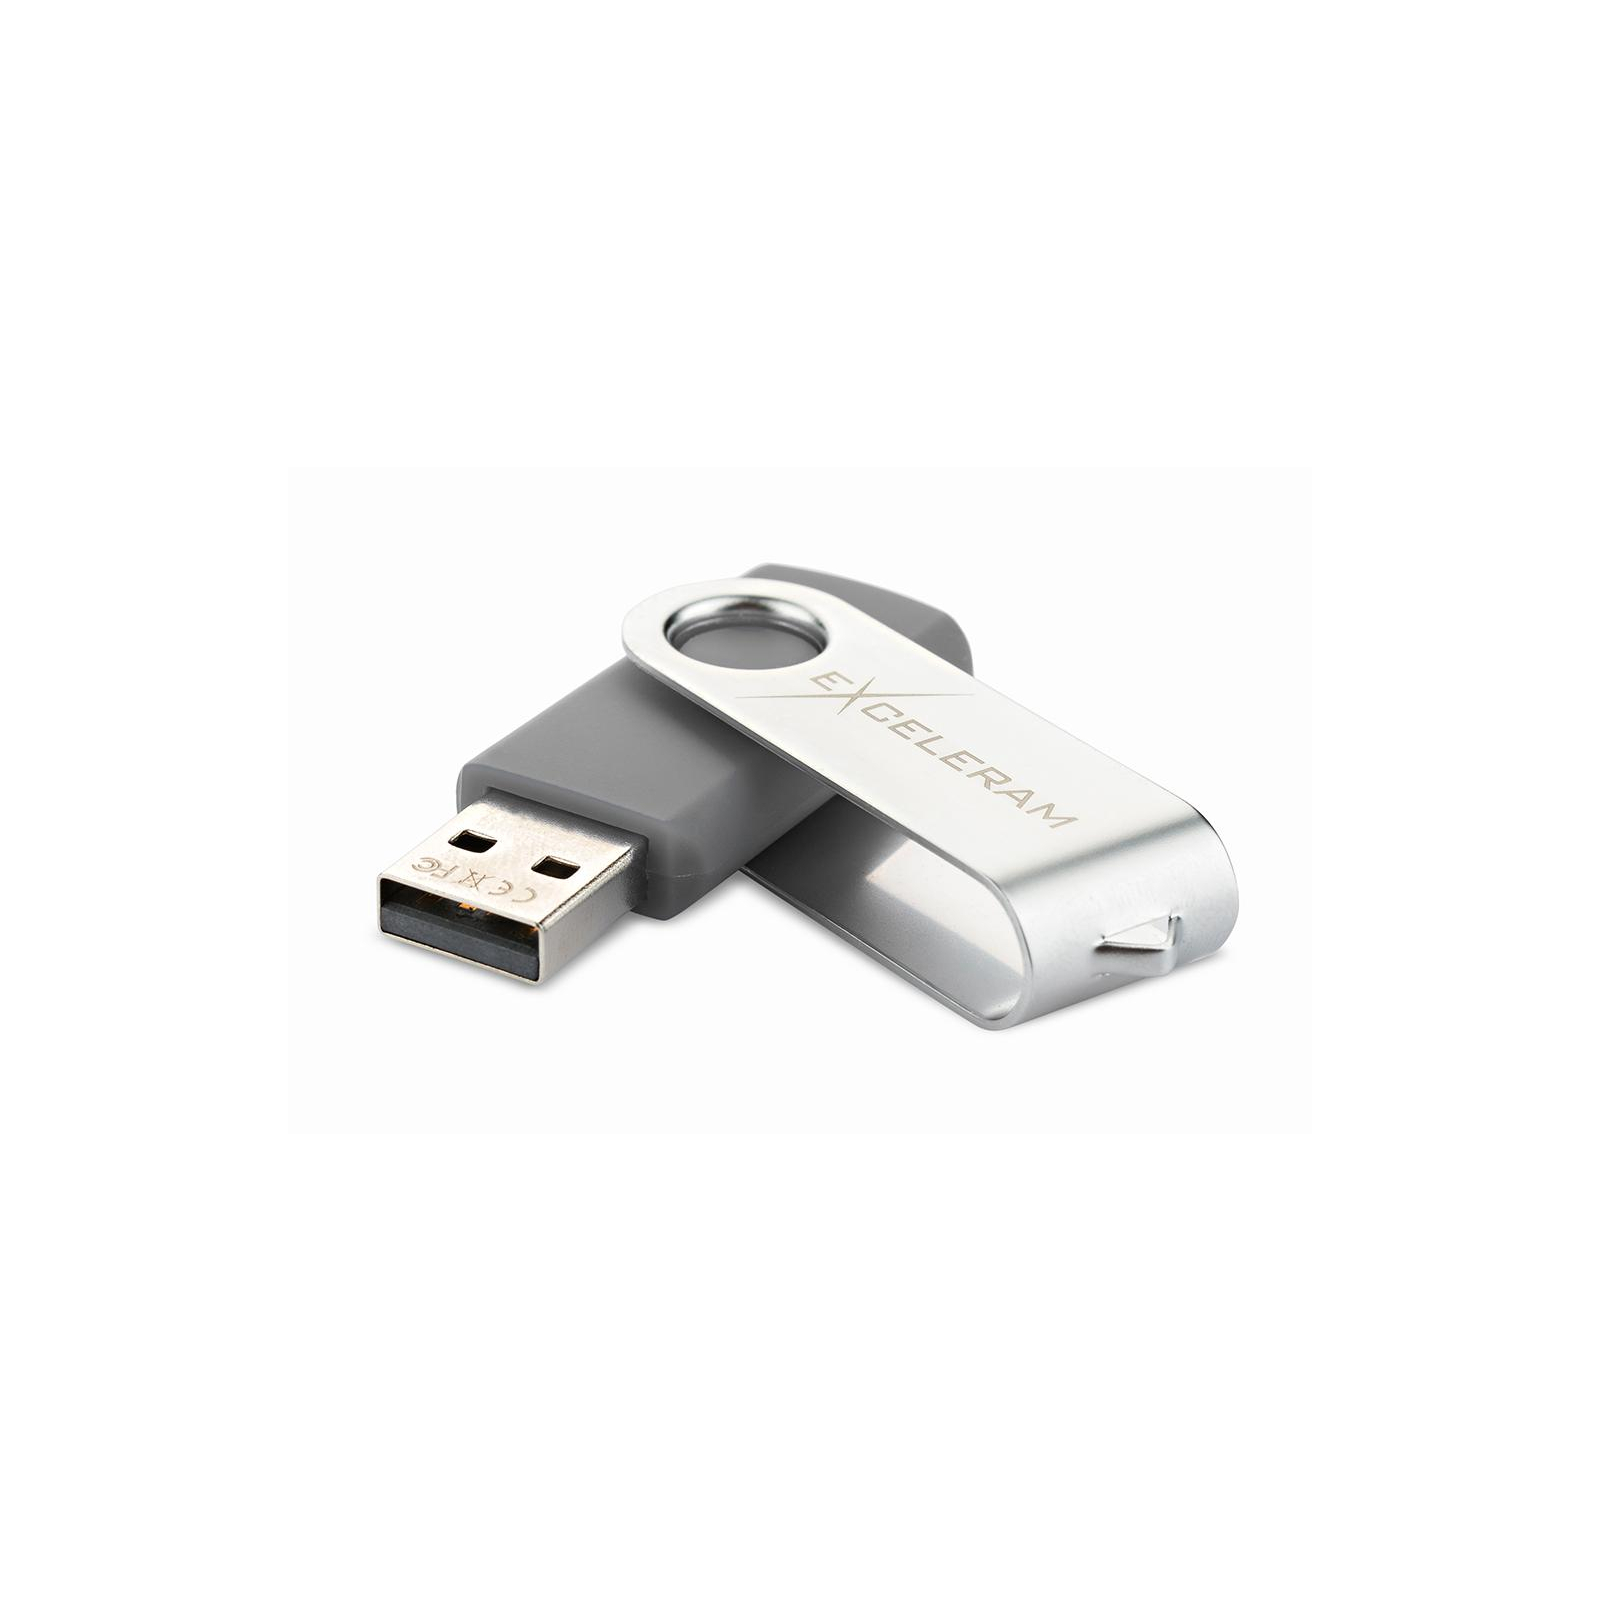 USB флеш накопитель eXceleram 16GB P1 Series Silver/Black USB 2.0 (EXP1U2SIB16) изображение 2